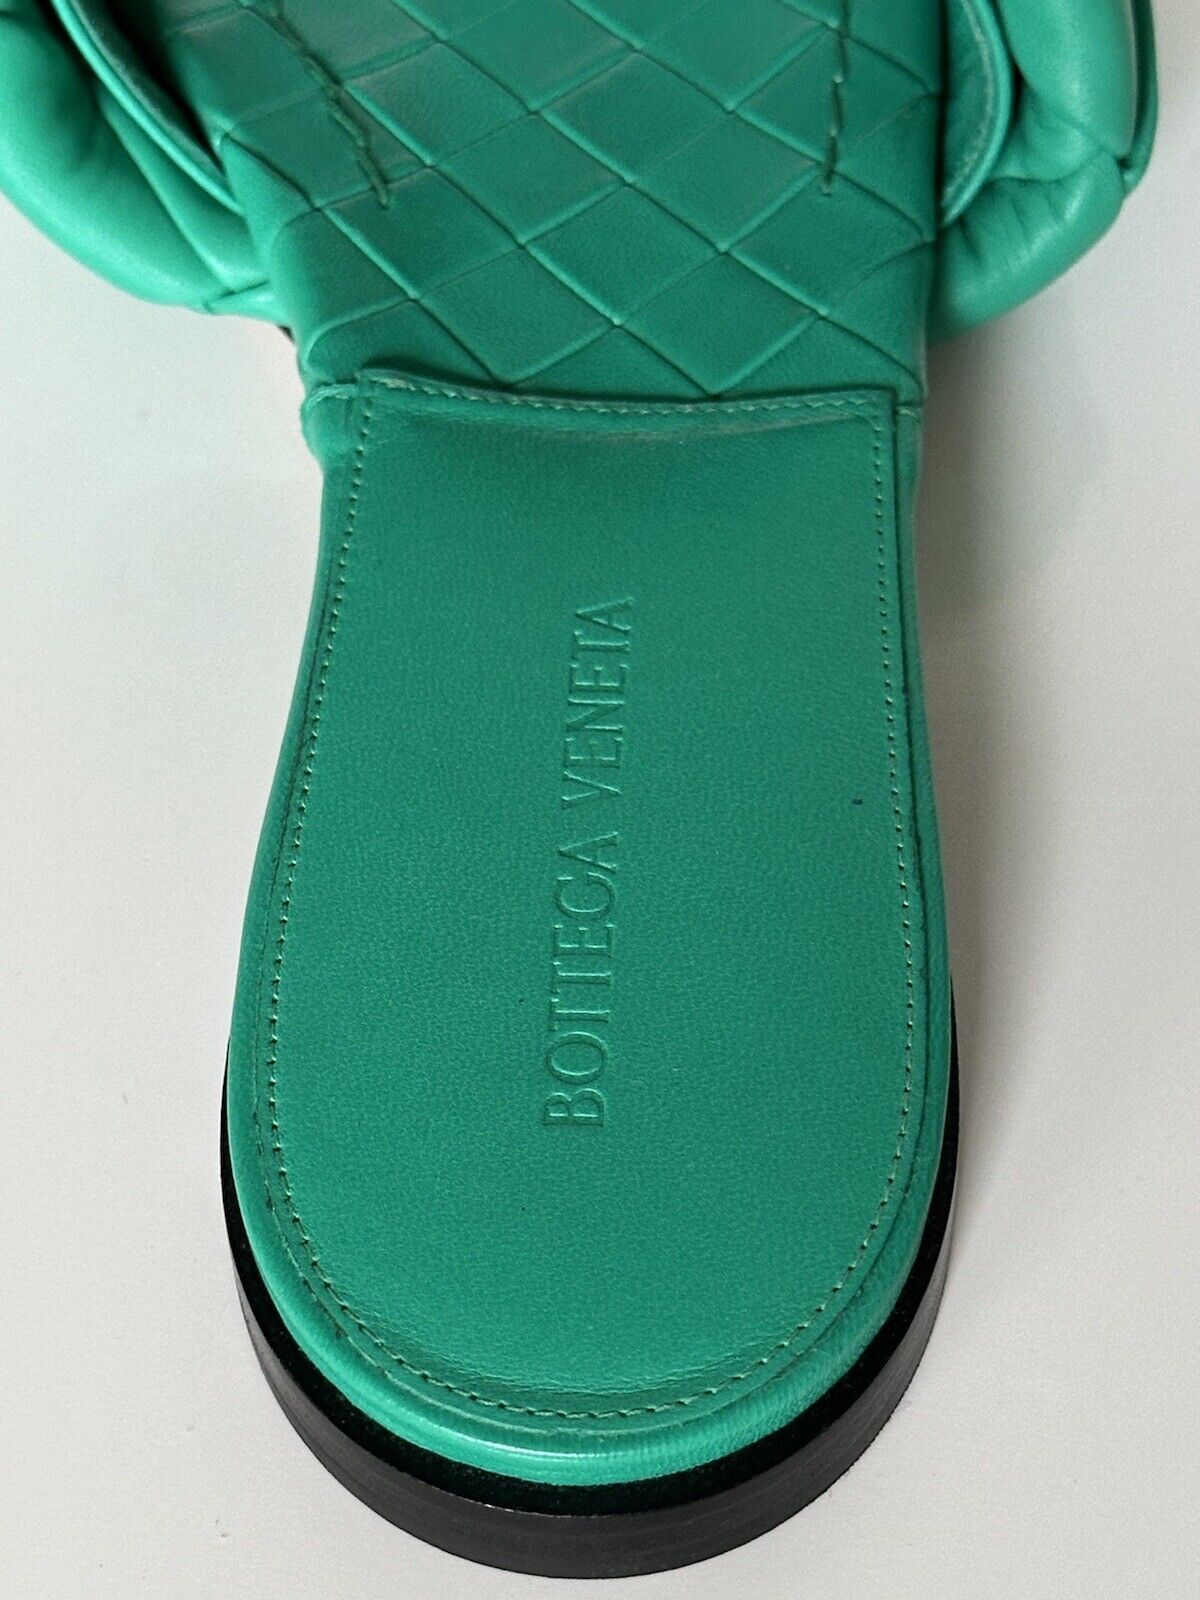 NWT 1350 долларов США Bottega Veneta Green Loden Сандалии на плоской подошве Обувь 7 США (37 евро) 608853